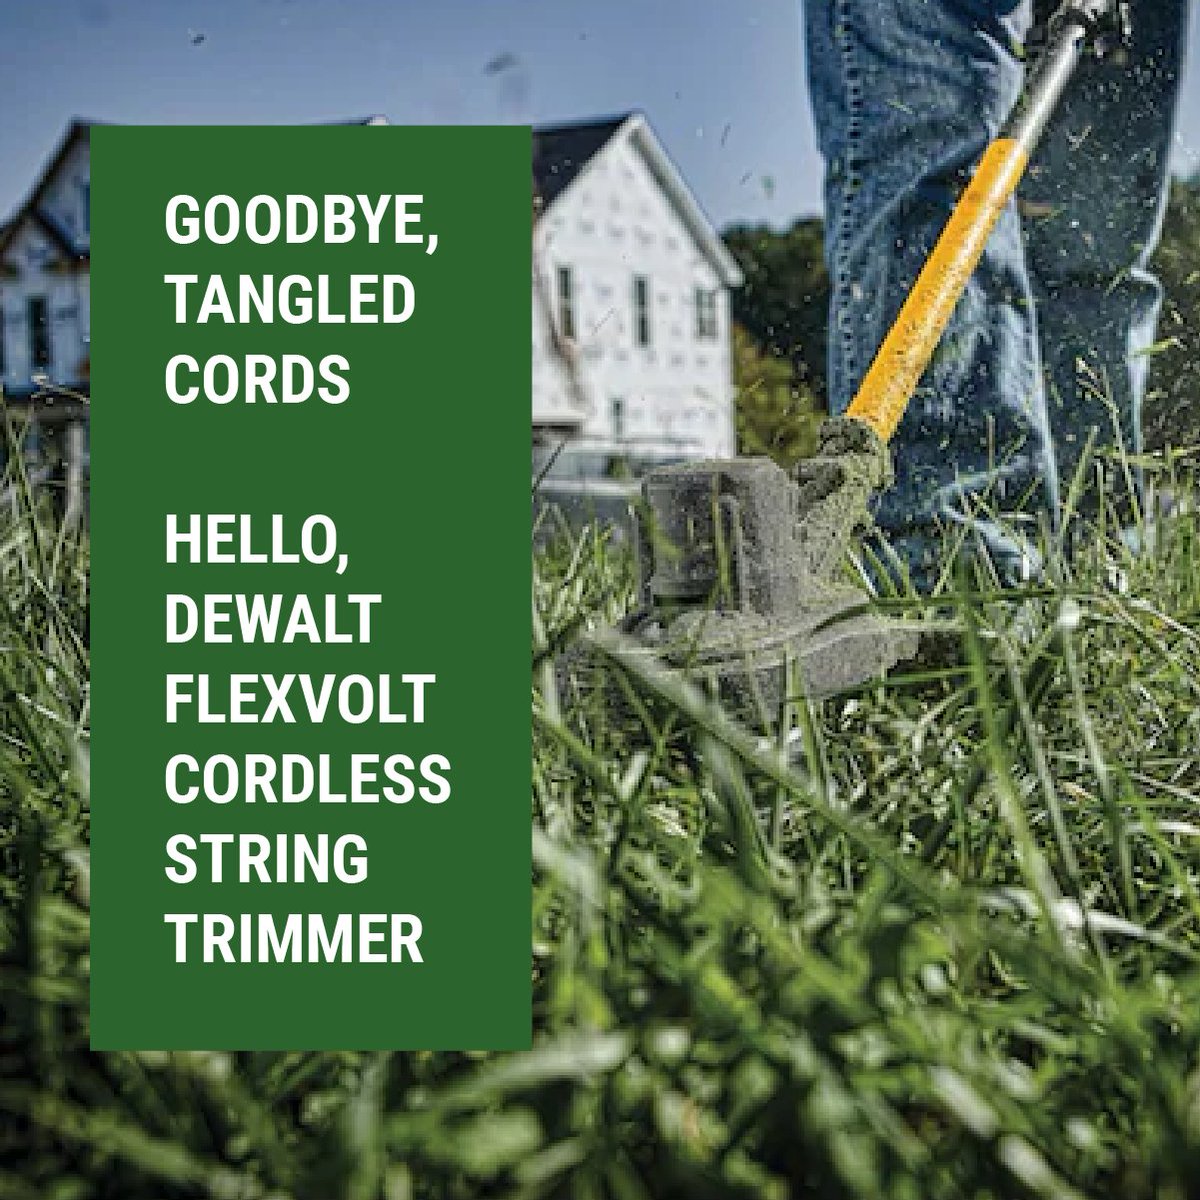 Say goodbye to tangled cords and hello to effortless yard maintenance with the @DEWALTtough Flexvolt Cordless String Trimmer! ow.ly/OVNi50OH5pI

#DewaltStringTrimmer #LawnCareSolutions #BatteryPowered #OttawaFastenerSupply #DEWALT #stringtrimmer #CordlessTrimmer